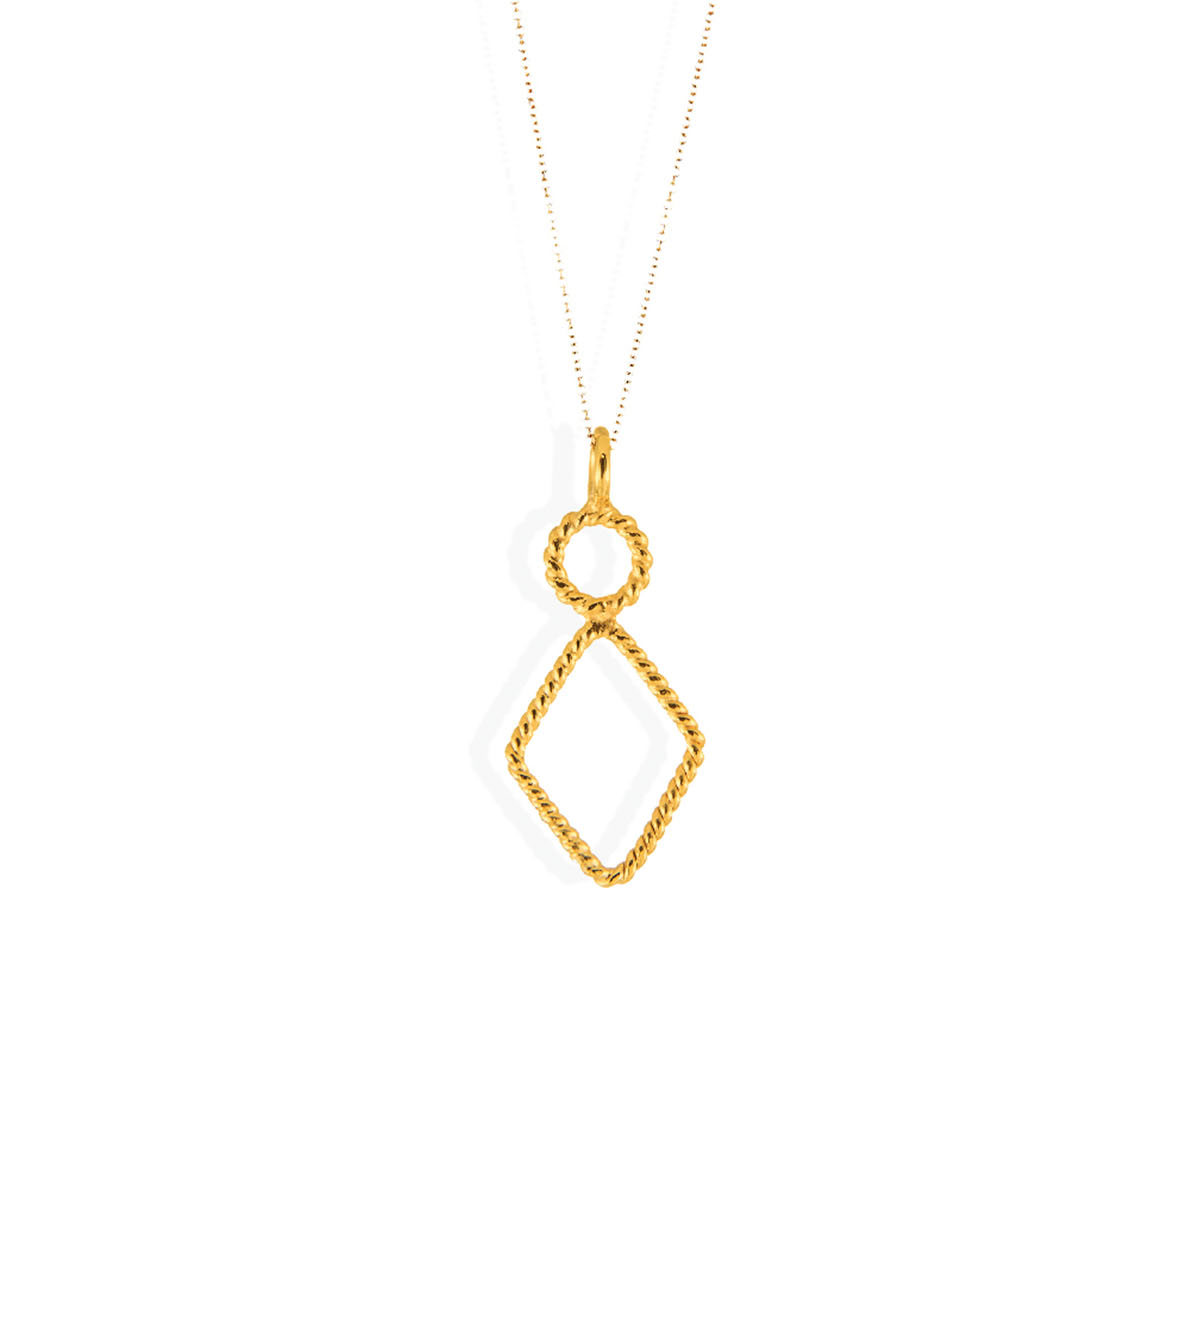 Tiny Rhombus pendant by Christina Soubli